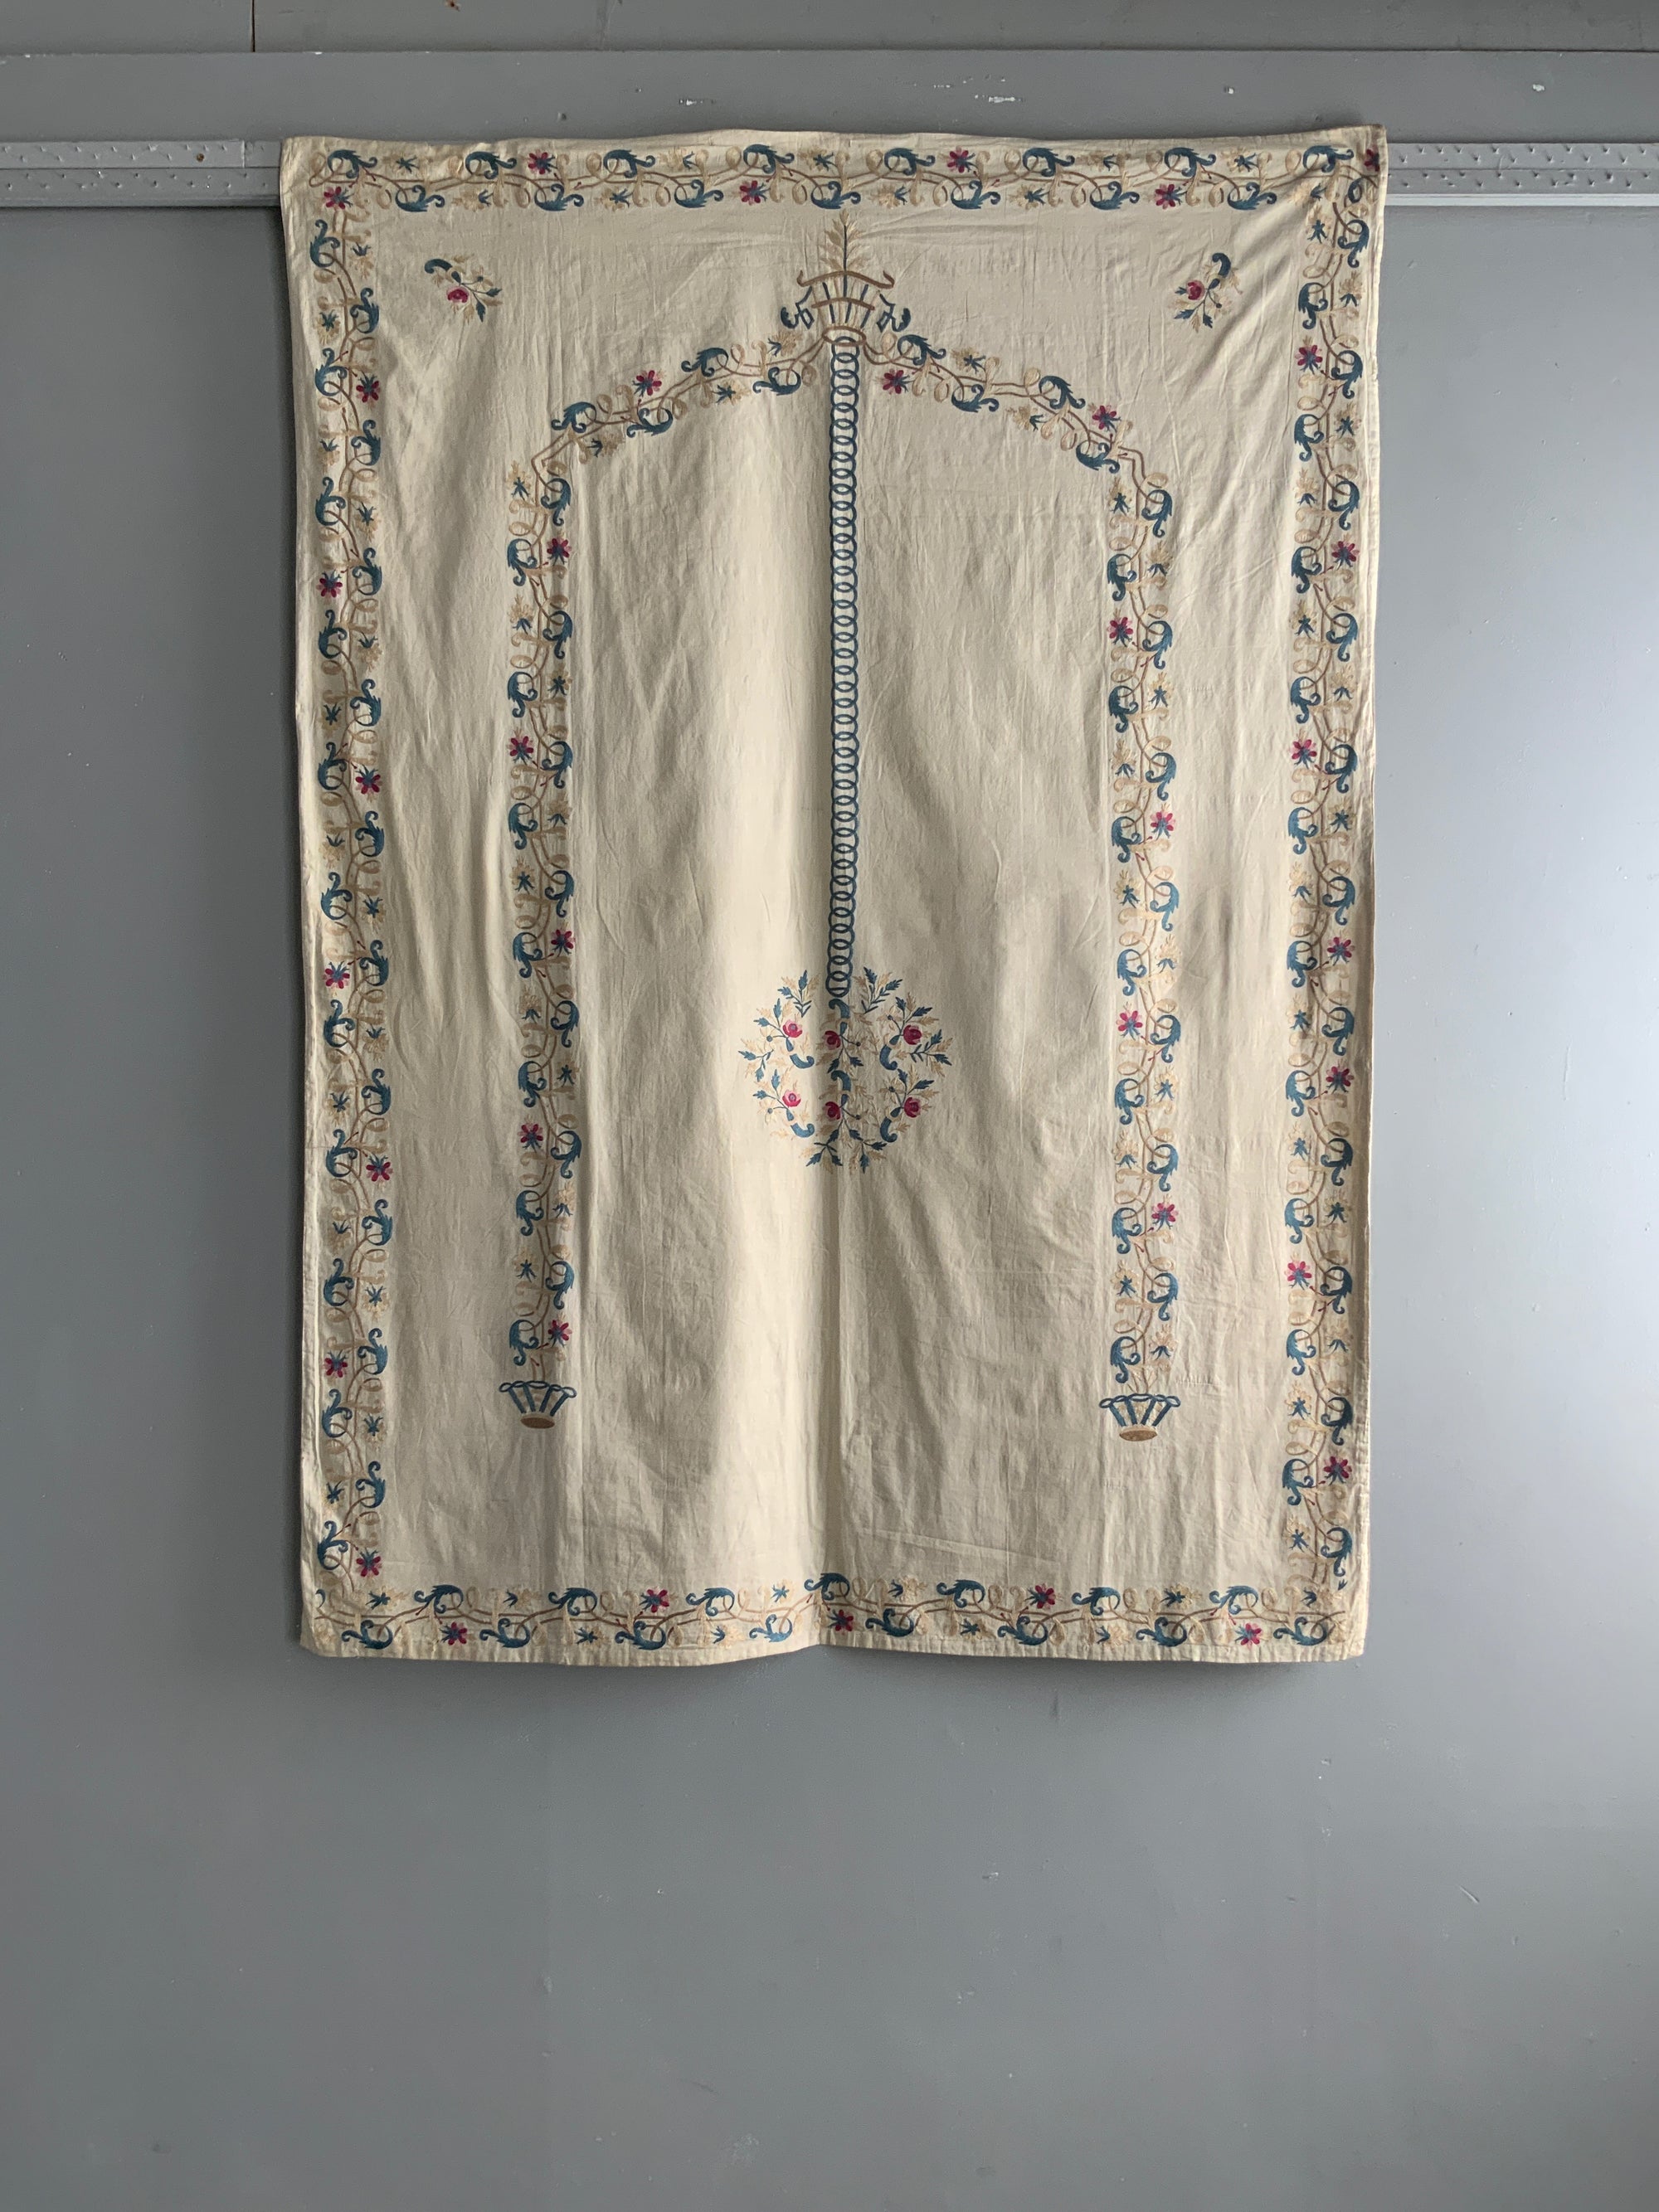 Ottoman antique embroidery (158 x 113cm)